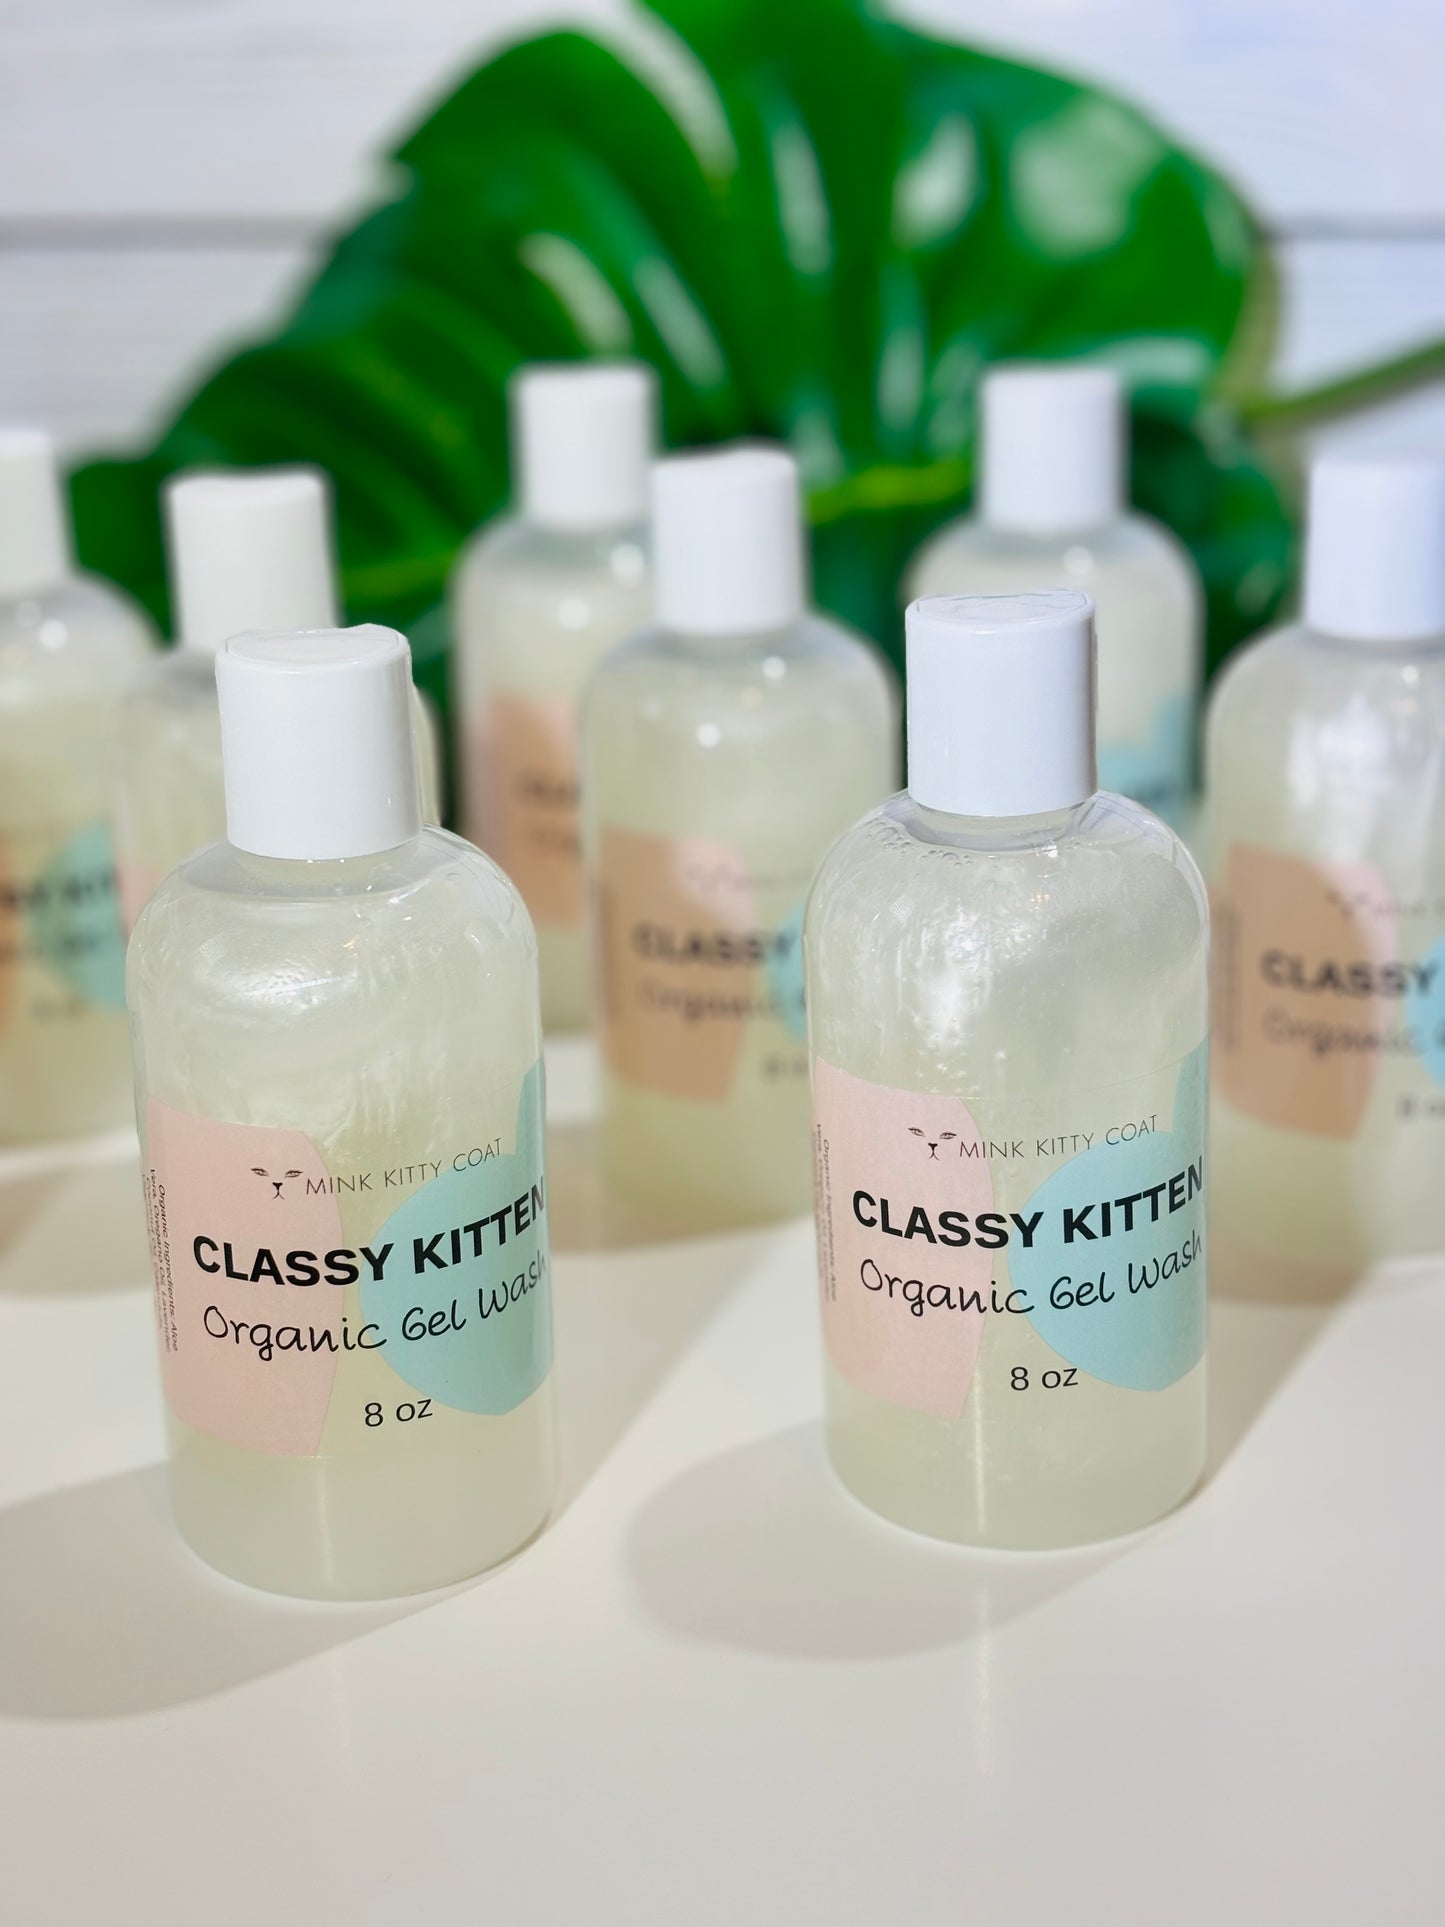 Classy Kitten Organic Gel Wash